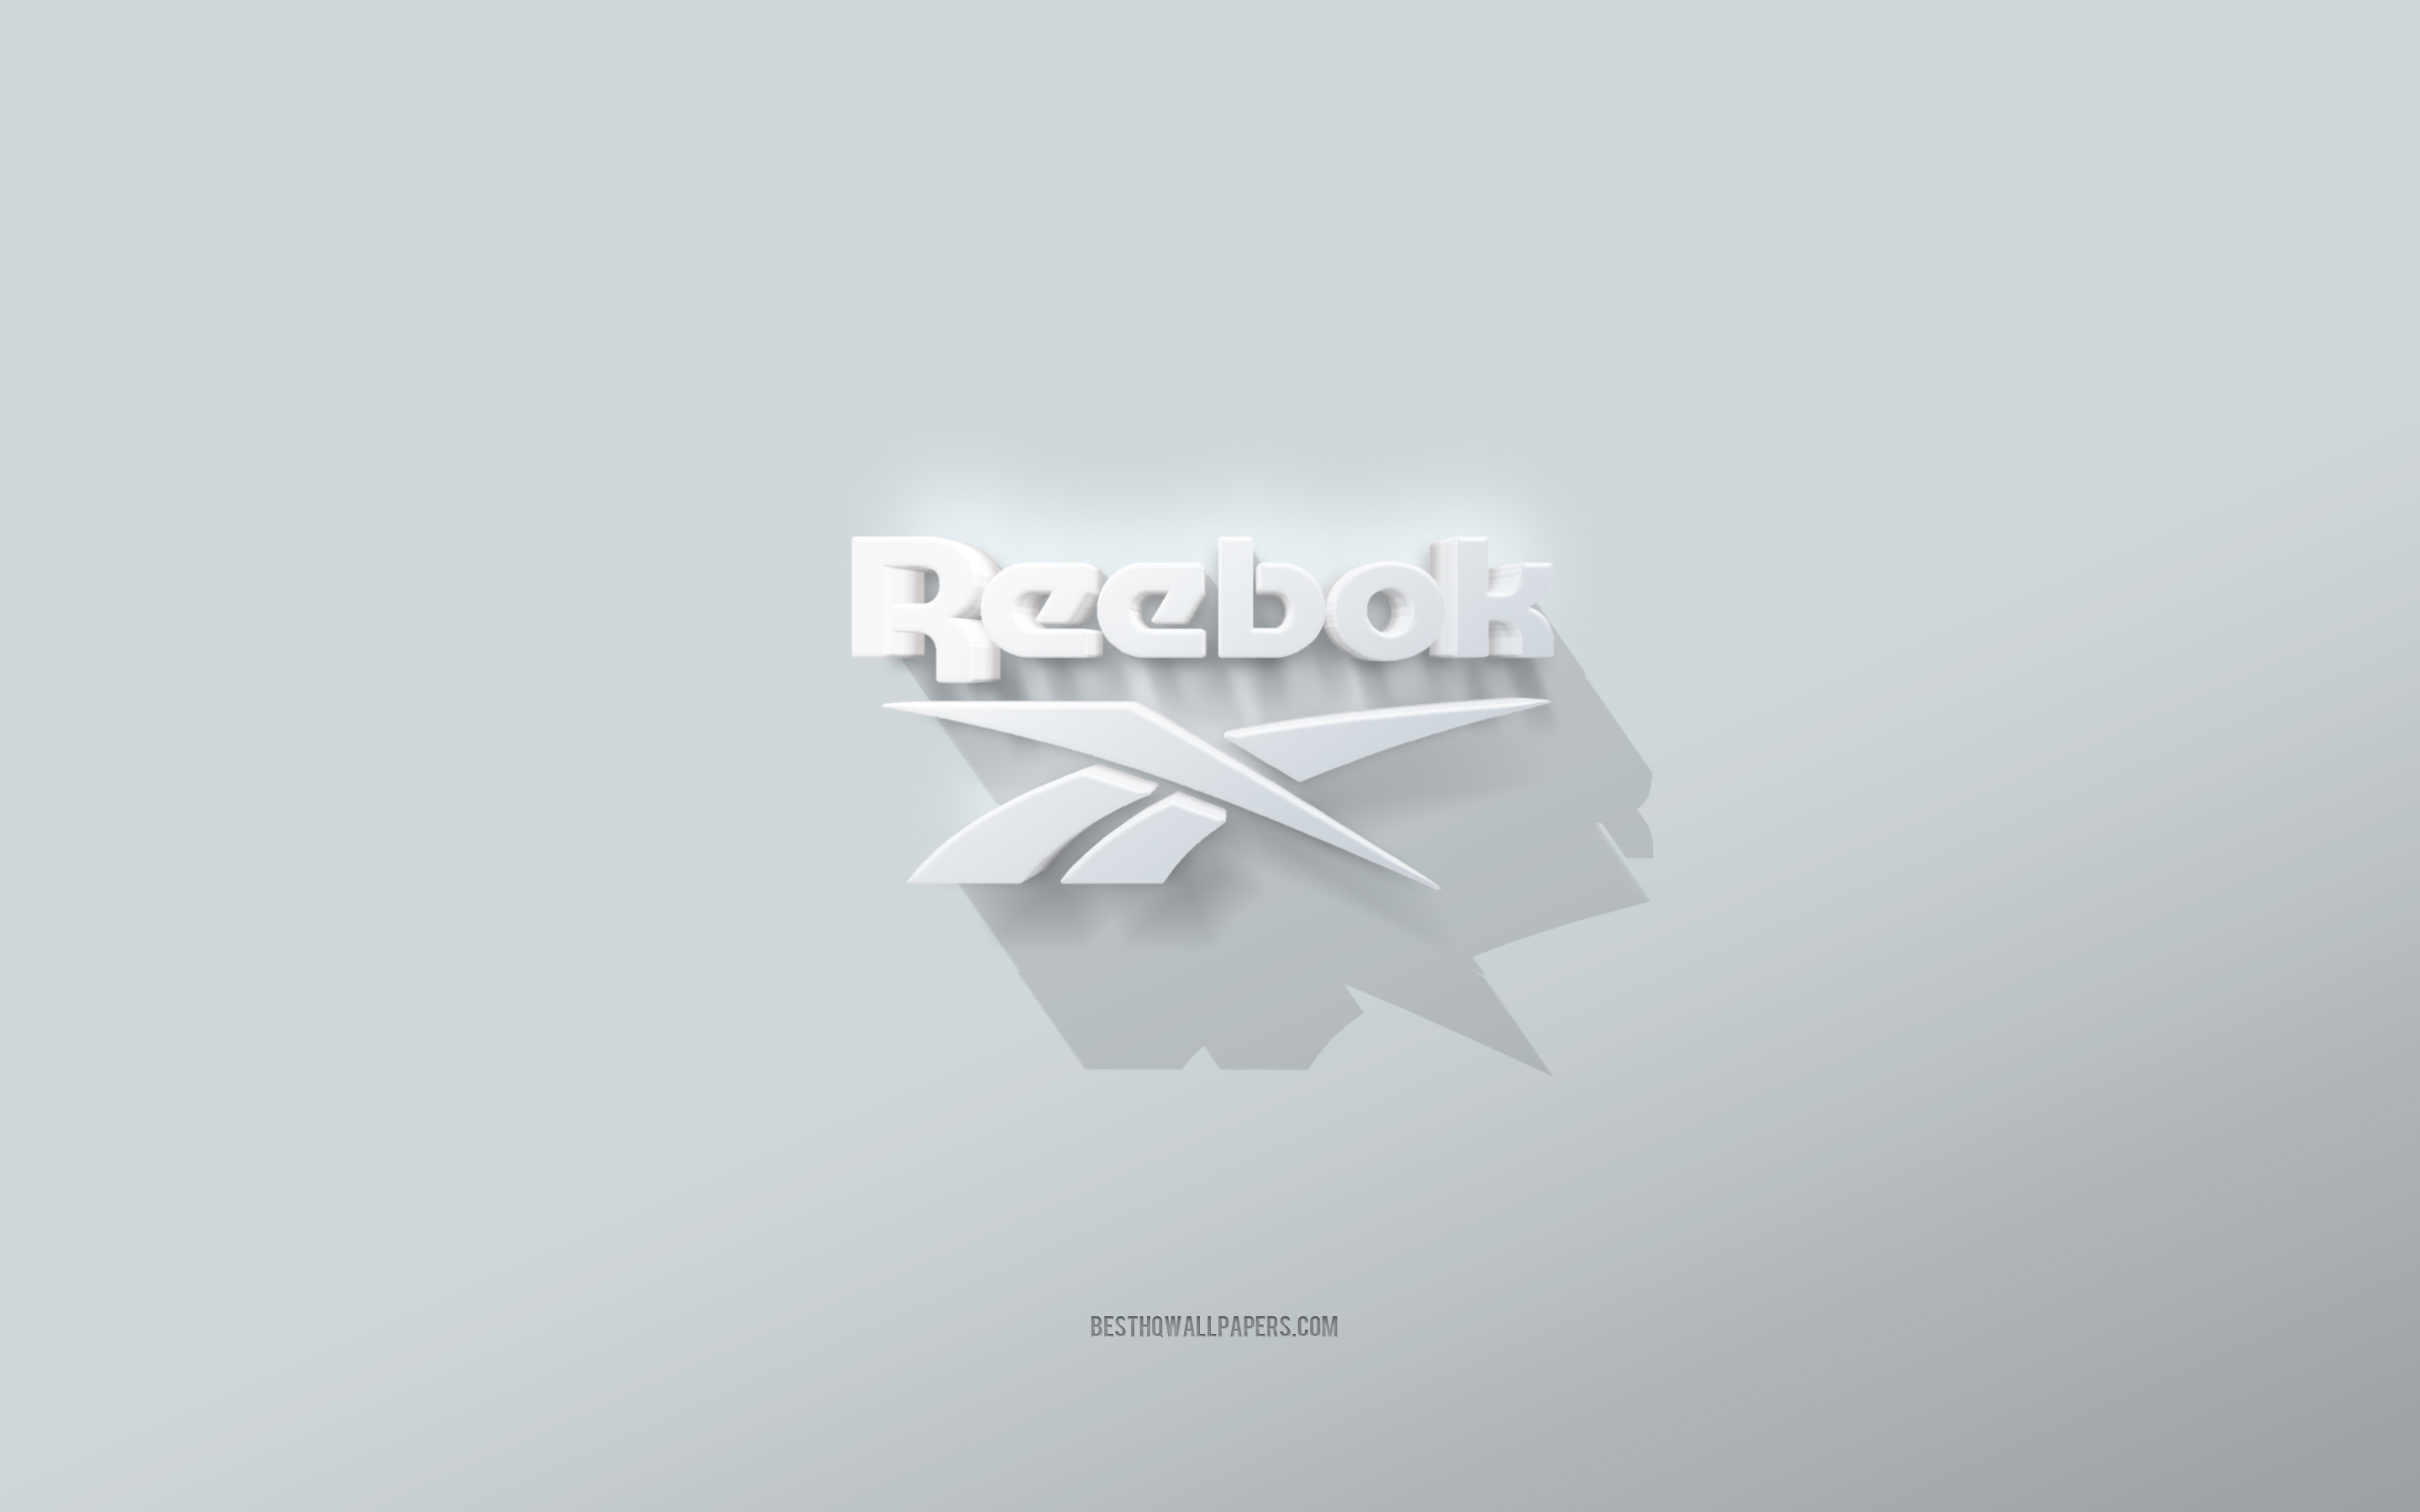 Download wallpapers Reebok logo, white background, Reebok 3d logo, 3d ...